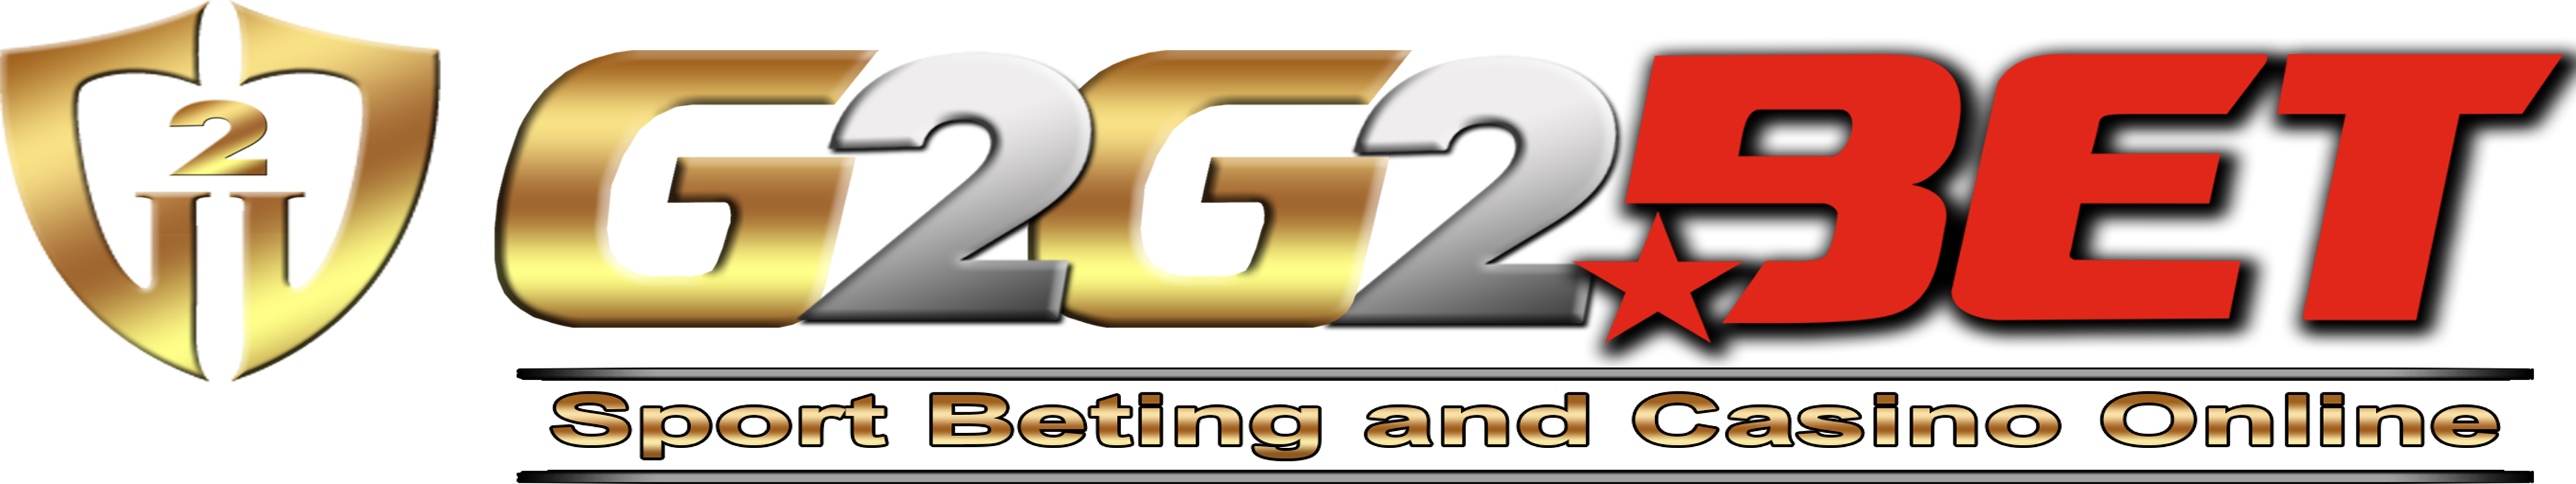 G2G2bet Casino